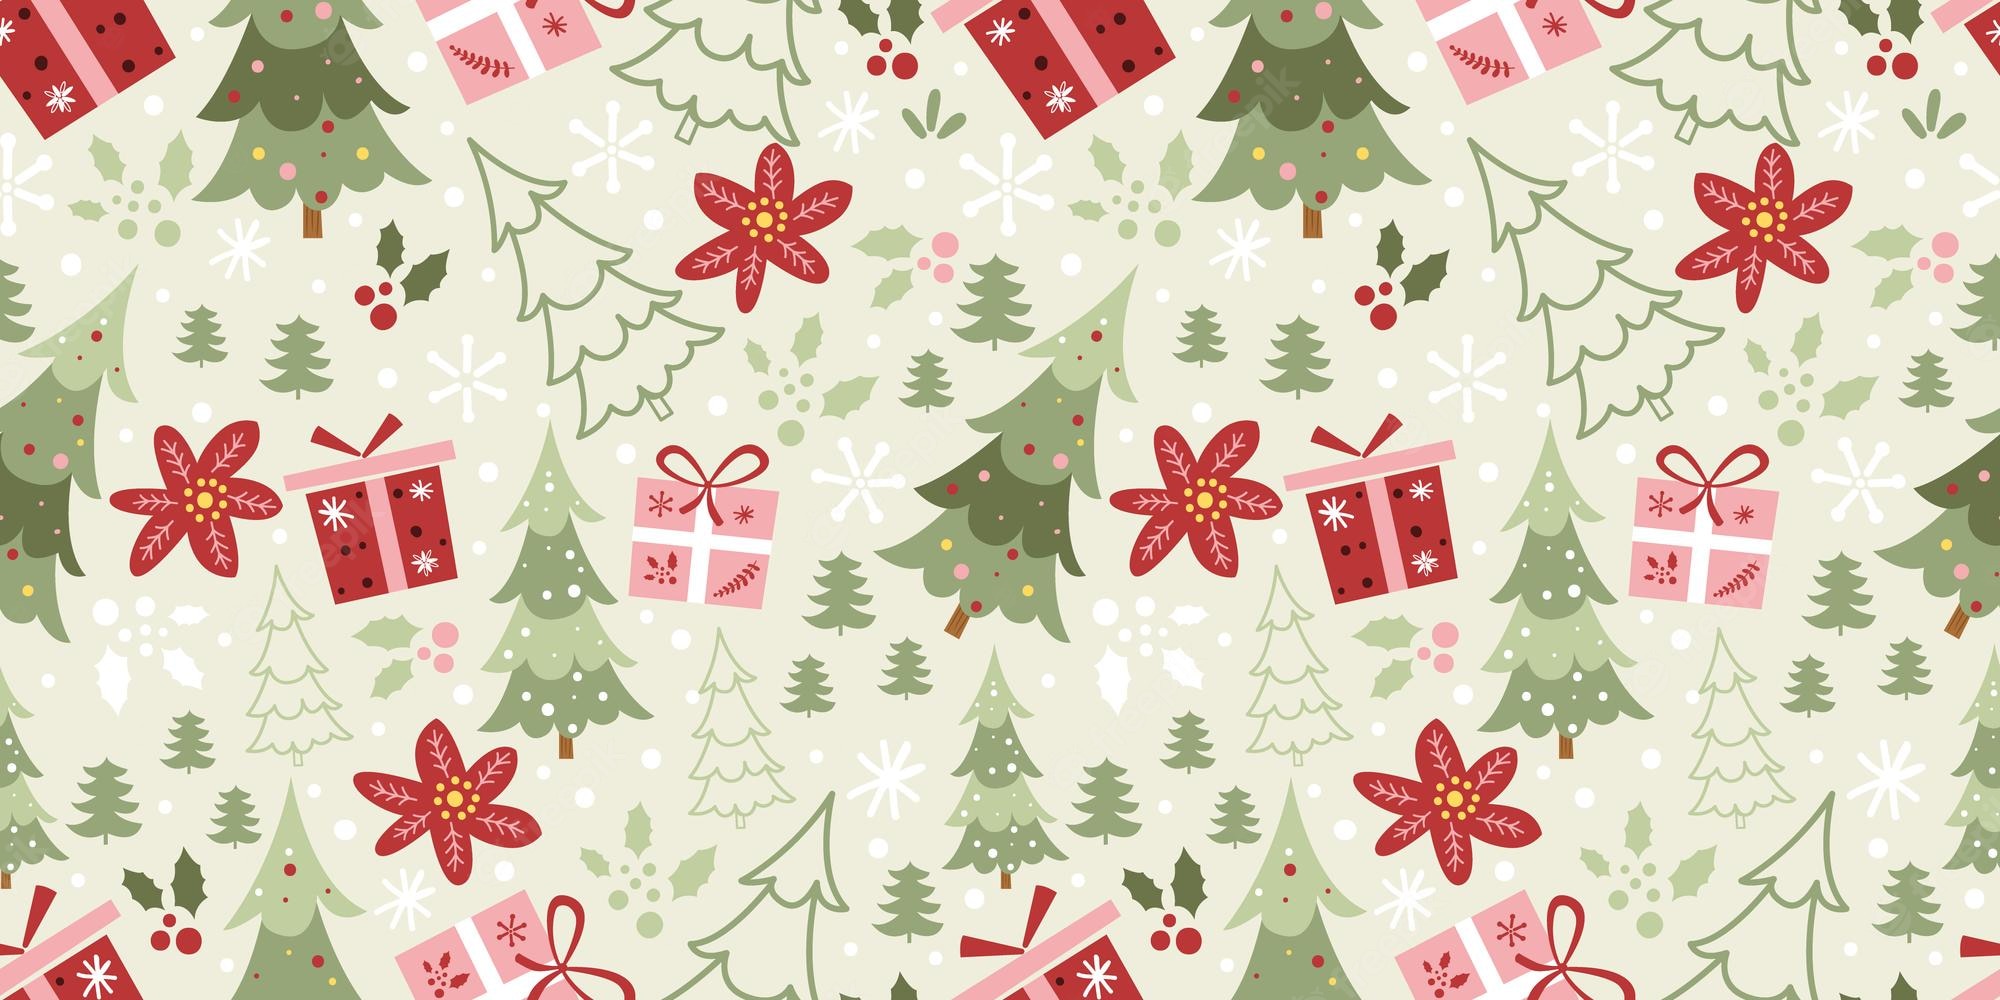 Christmas patterns Image. Free Vectors, & PSD